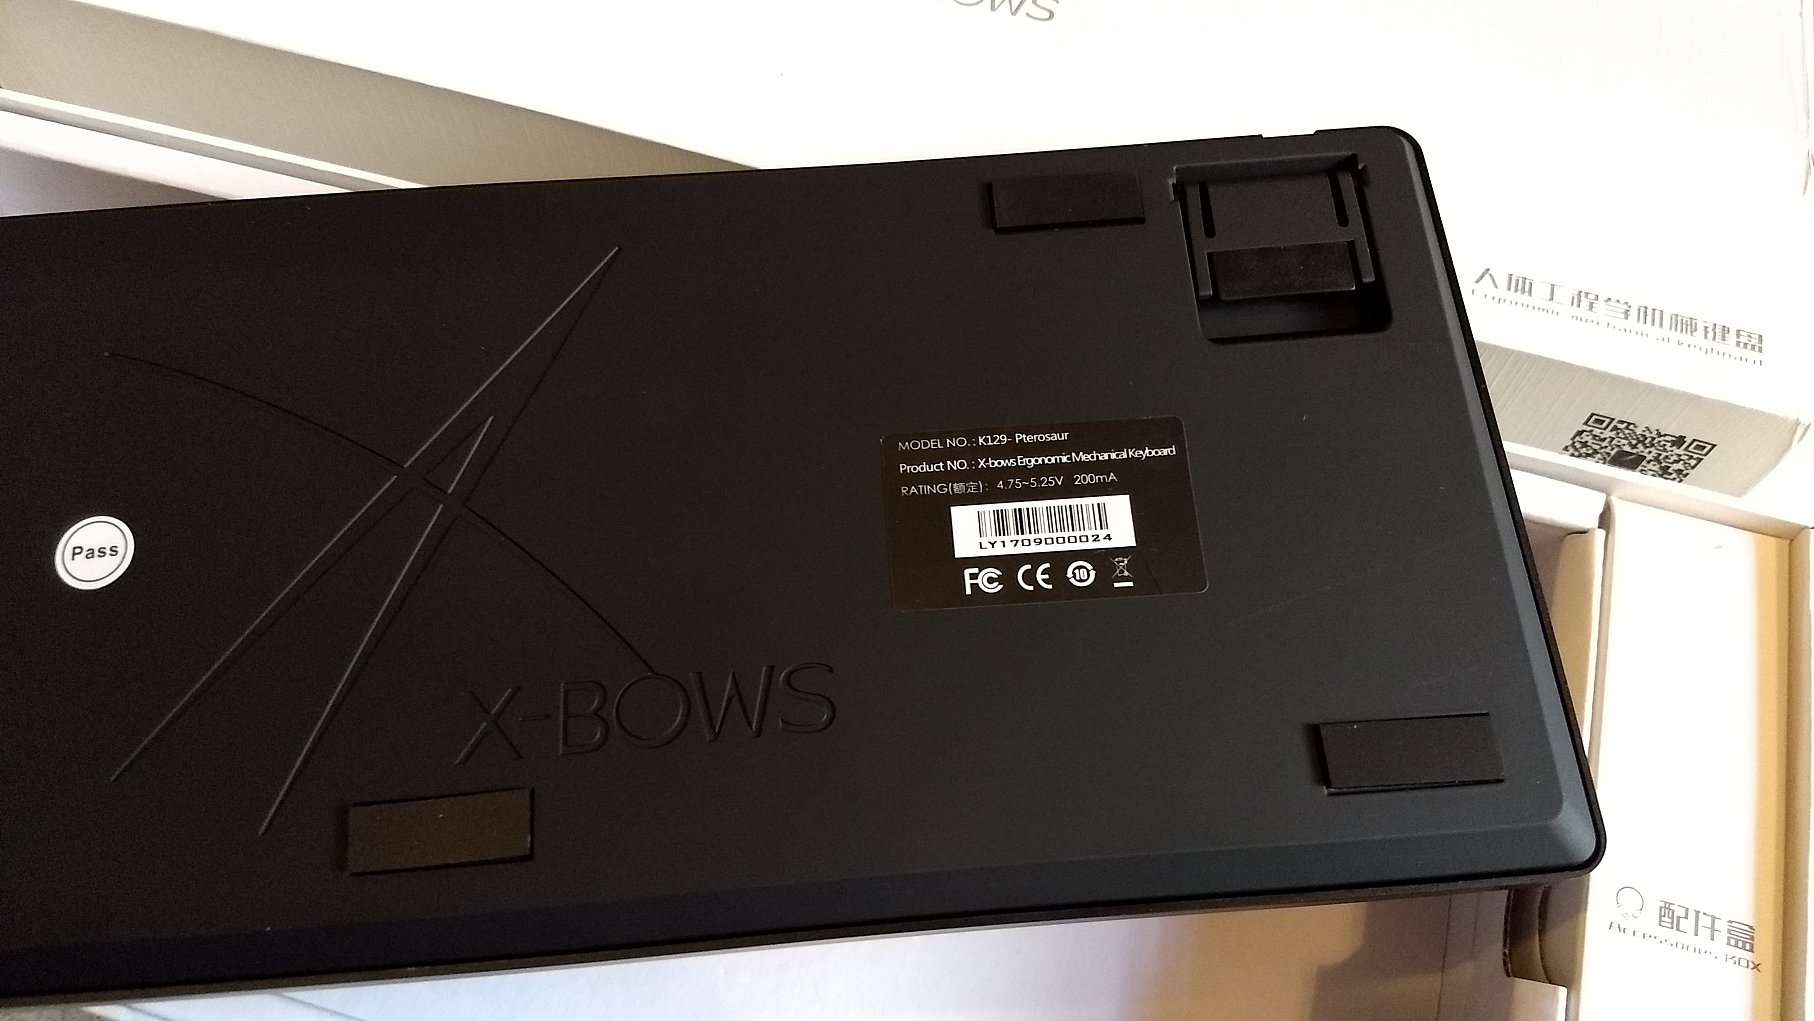 x-bows keyboard back 36829